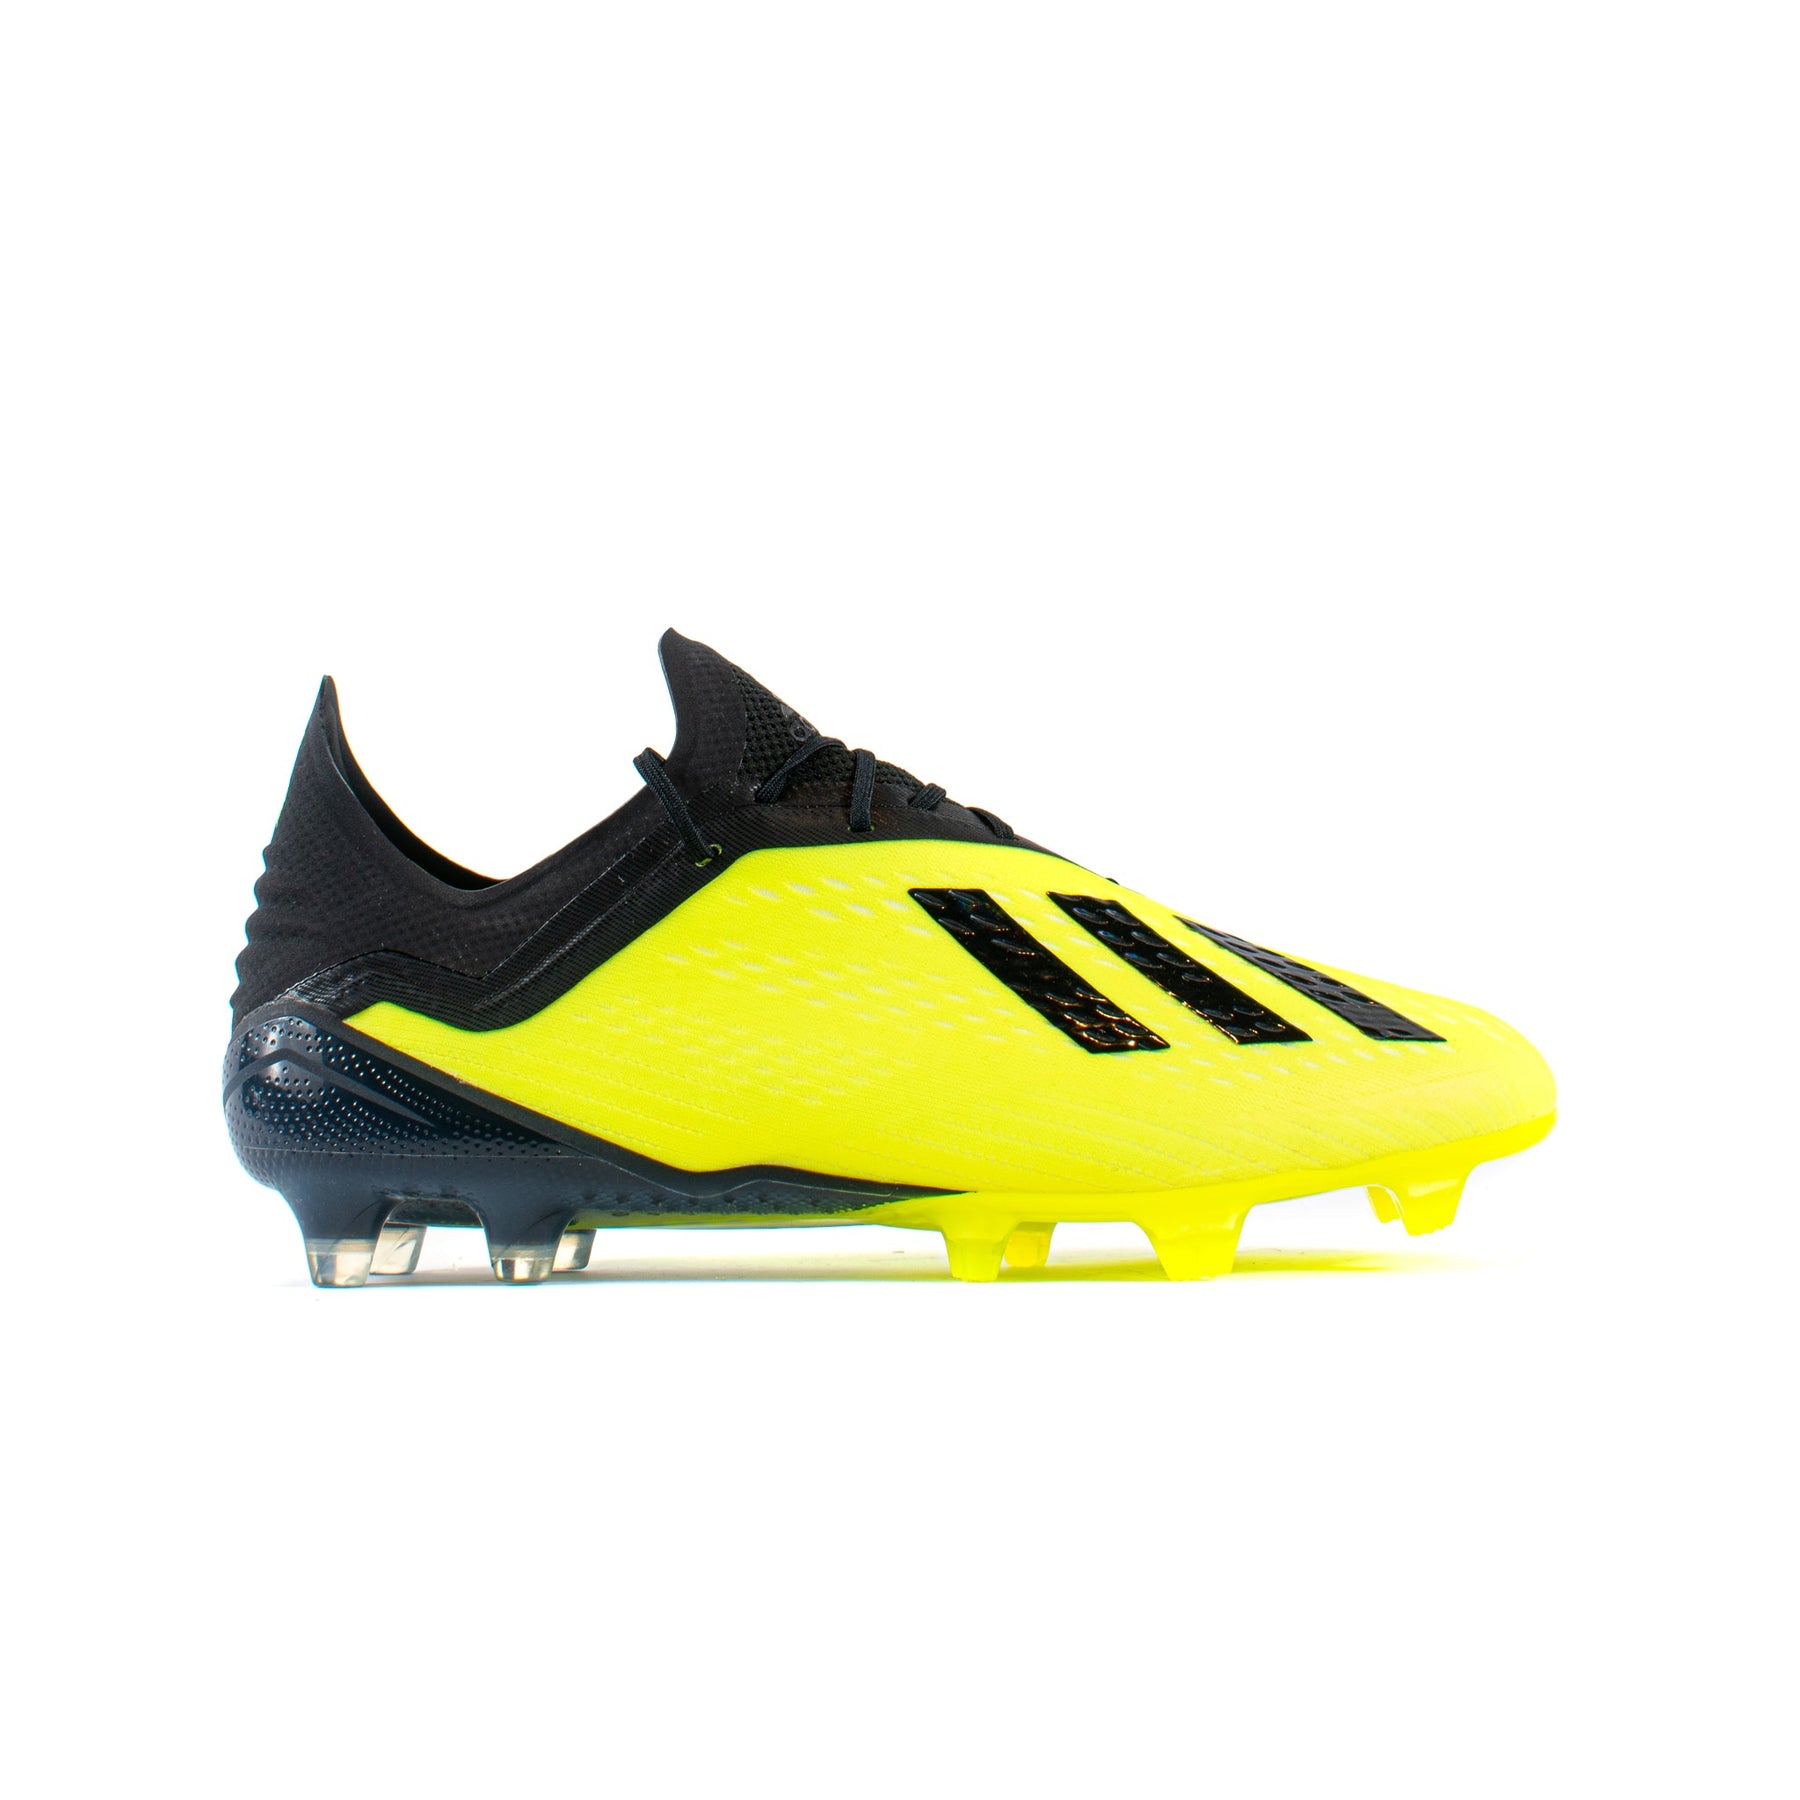 Adidas X18.1 Yellow FG – Soccer Cleats